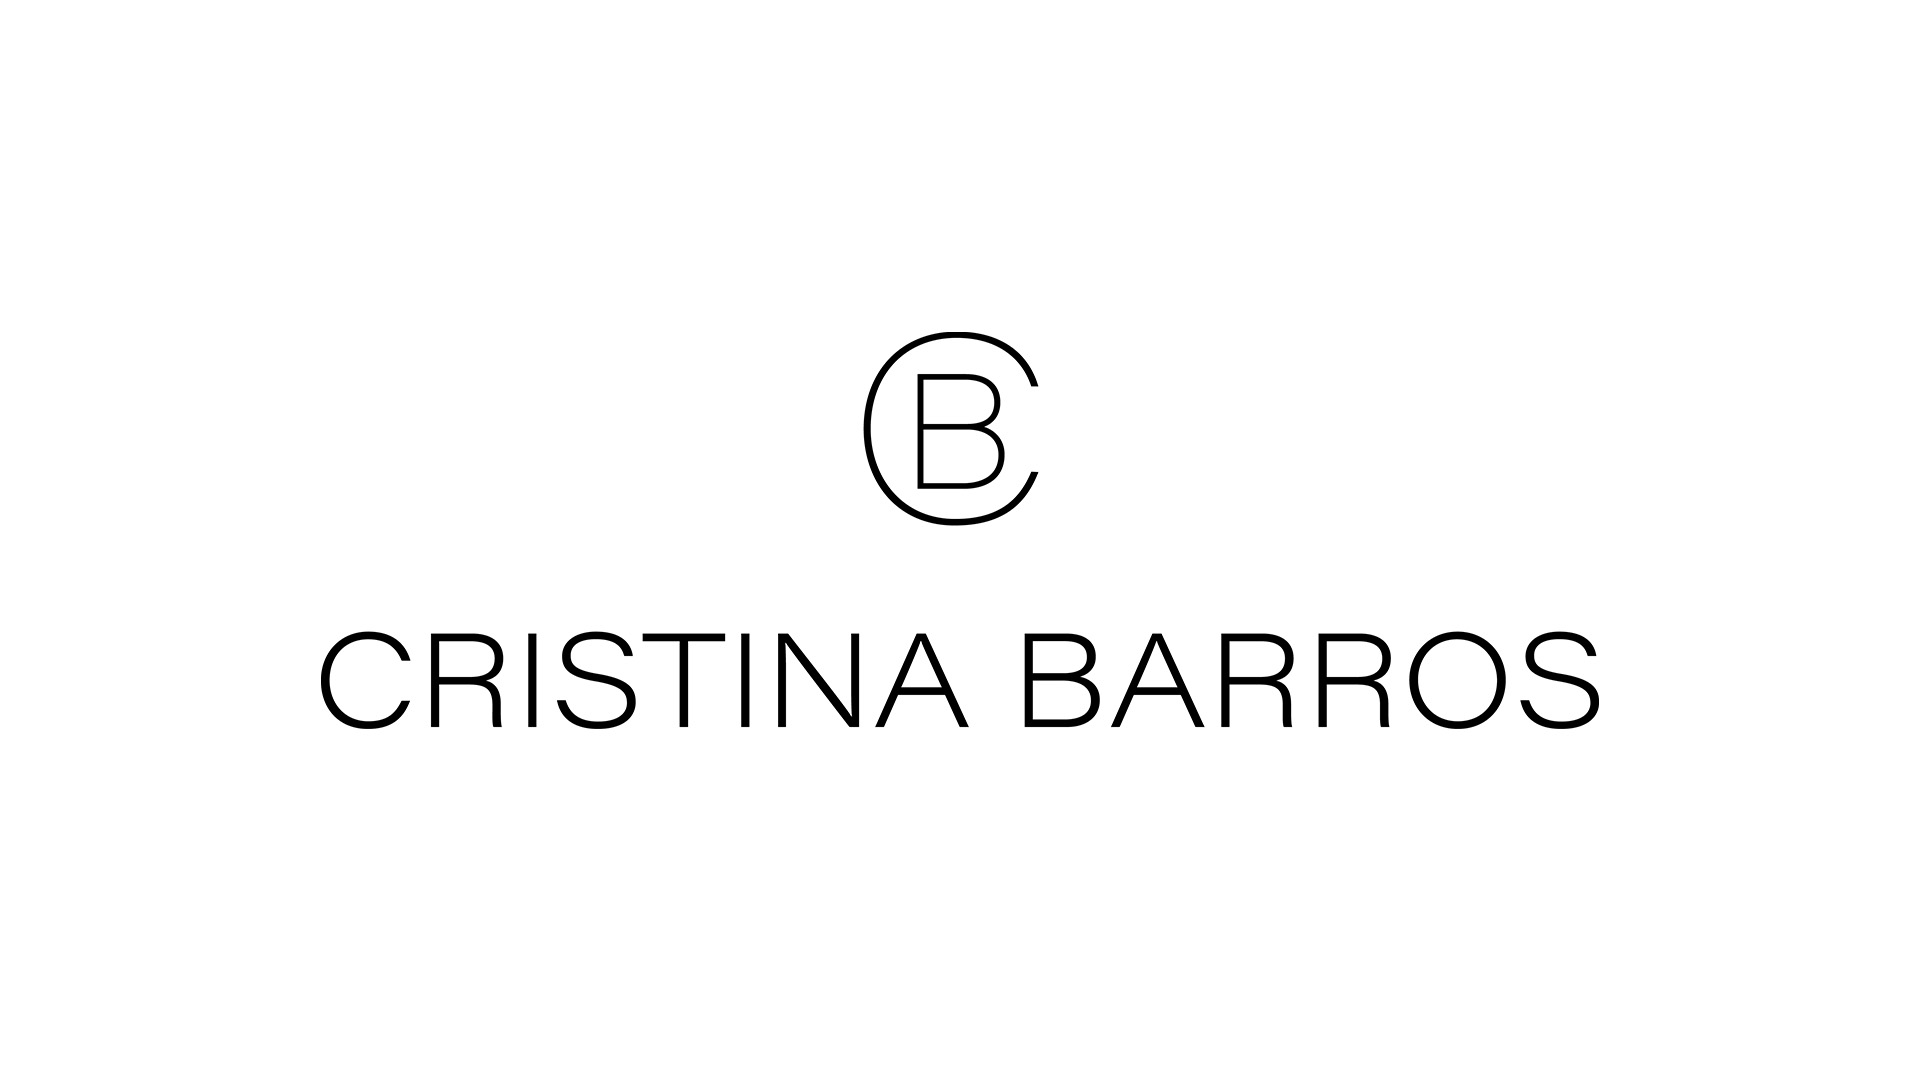 2 Cristina Barros